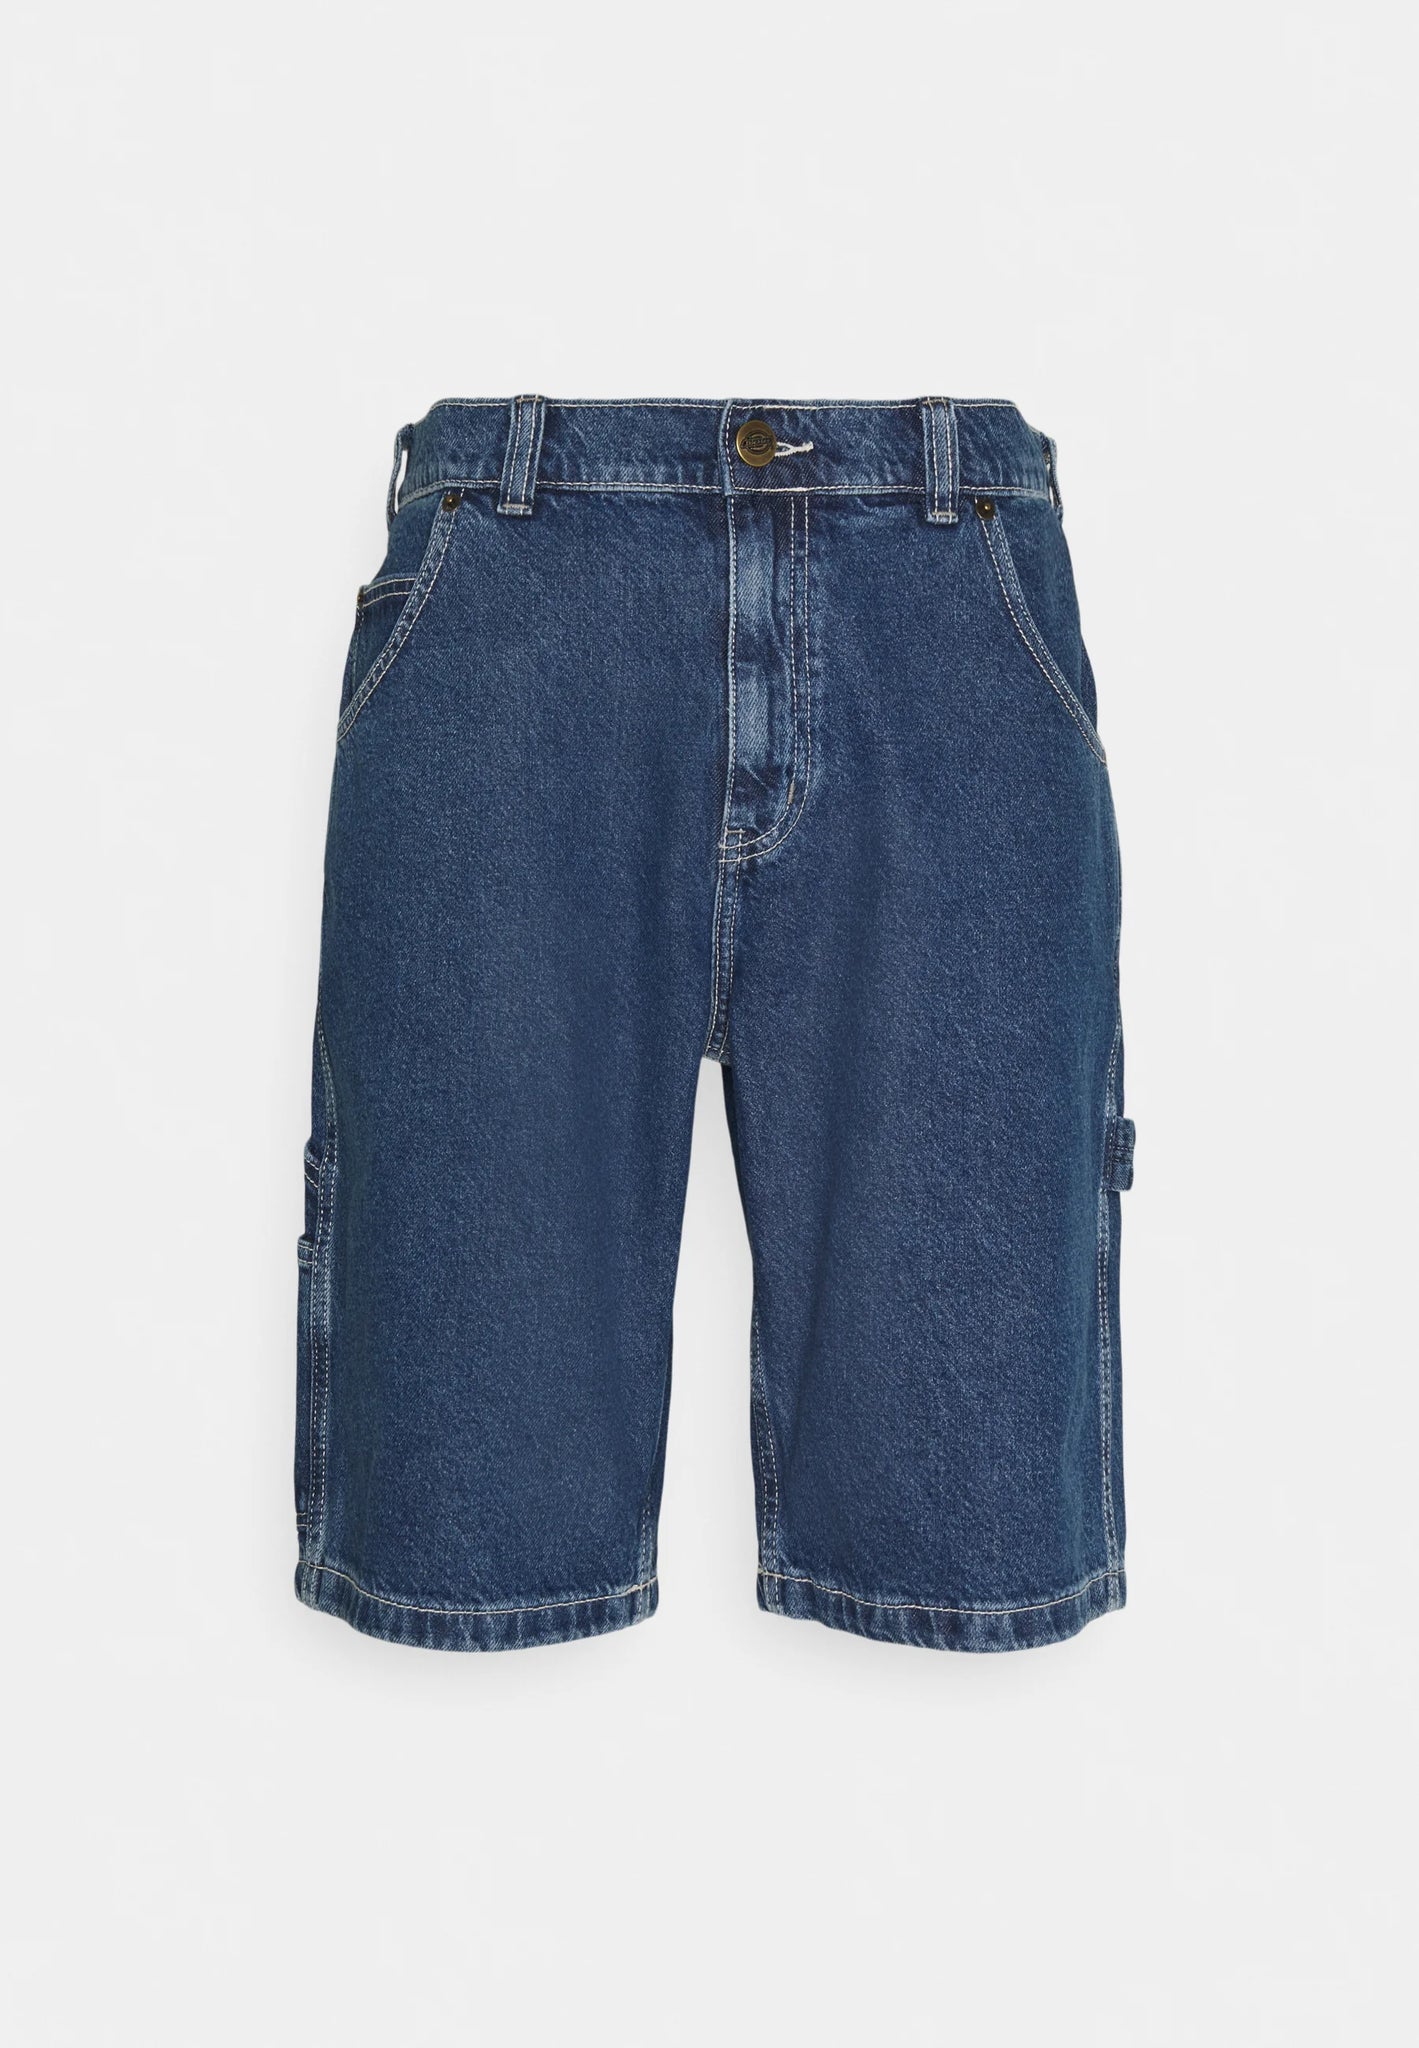 Shorts Garyville in Denim / Jeans - Ideal Moda